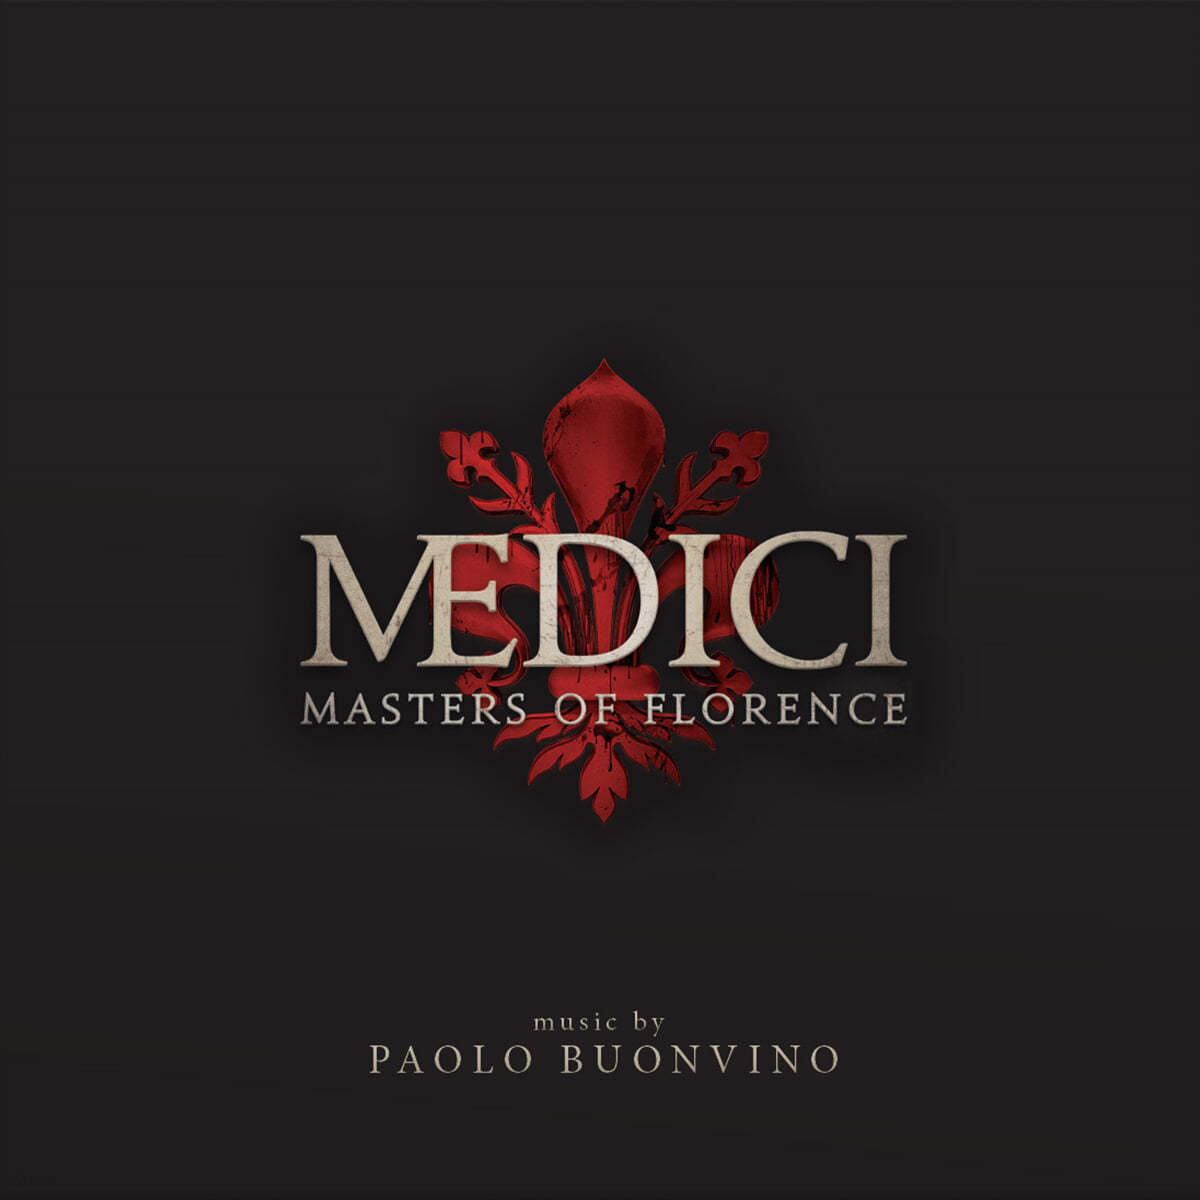 Netflix '메디치: 마스터즈 오브 플로렌스' 드라마 음악 (MEDICI: Masters of Florence OST by Paolo Buonvino)